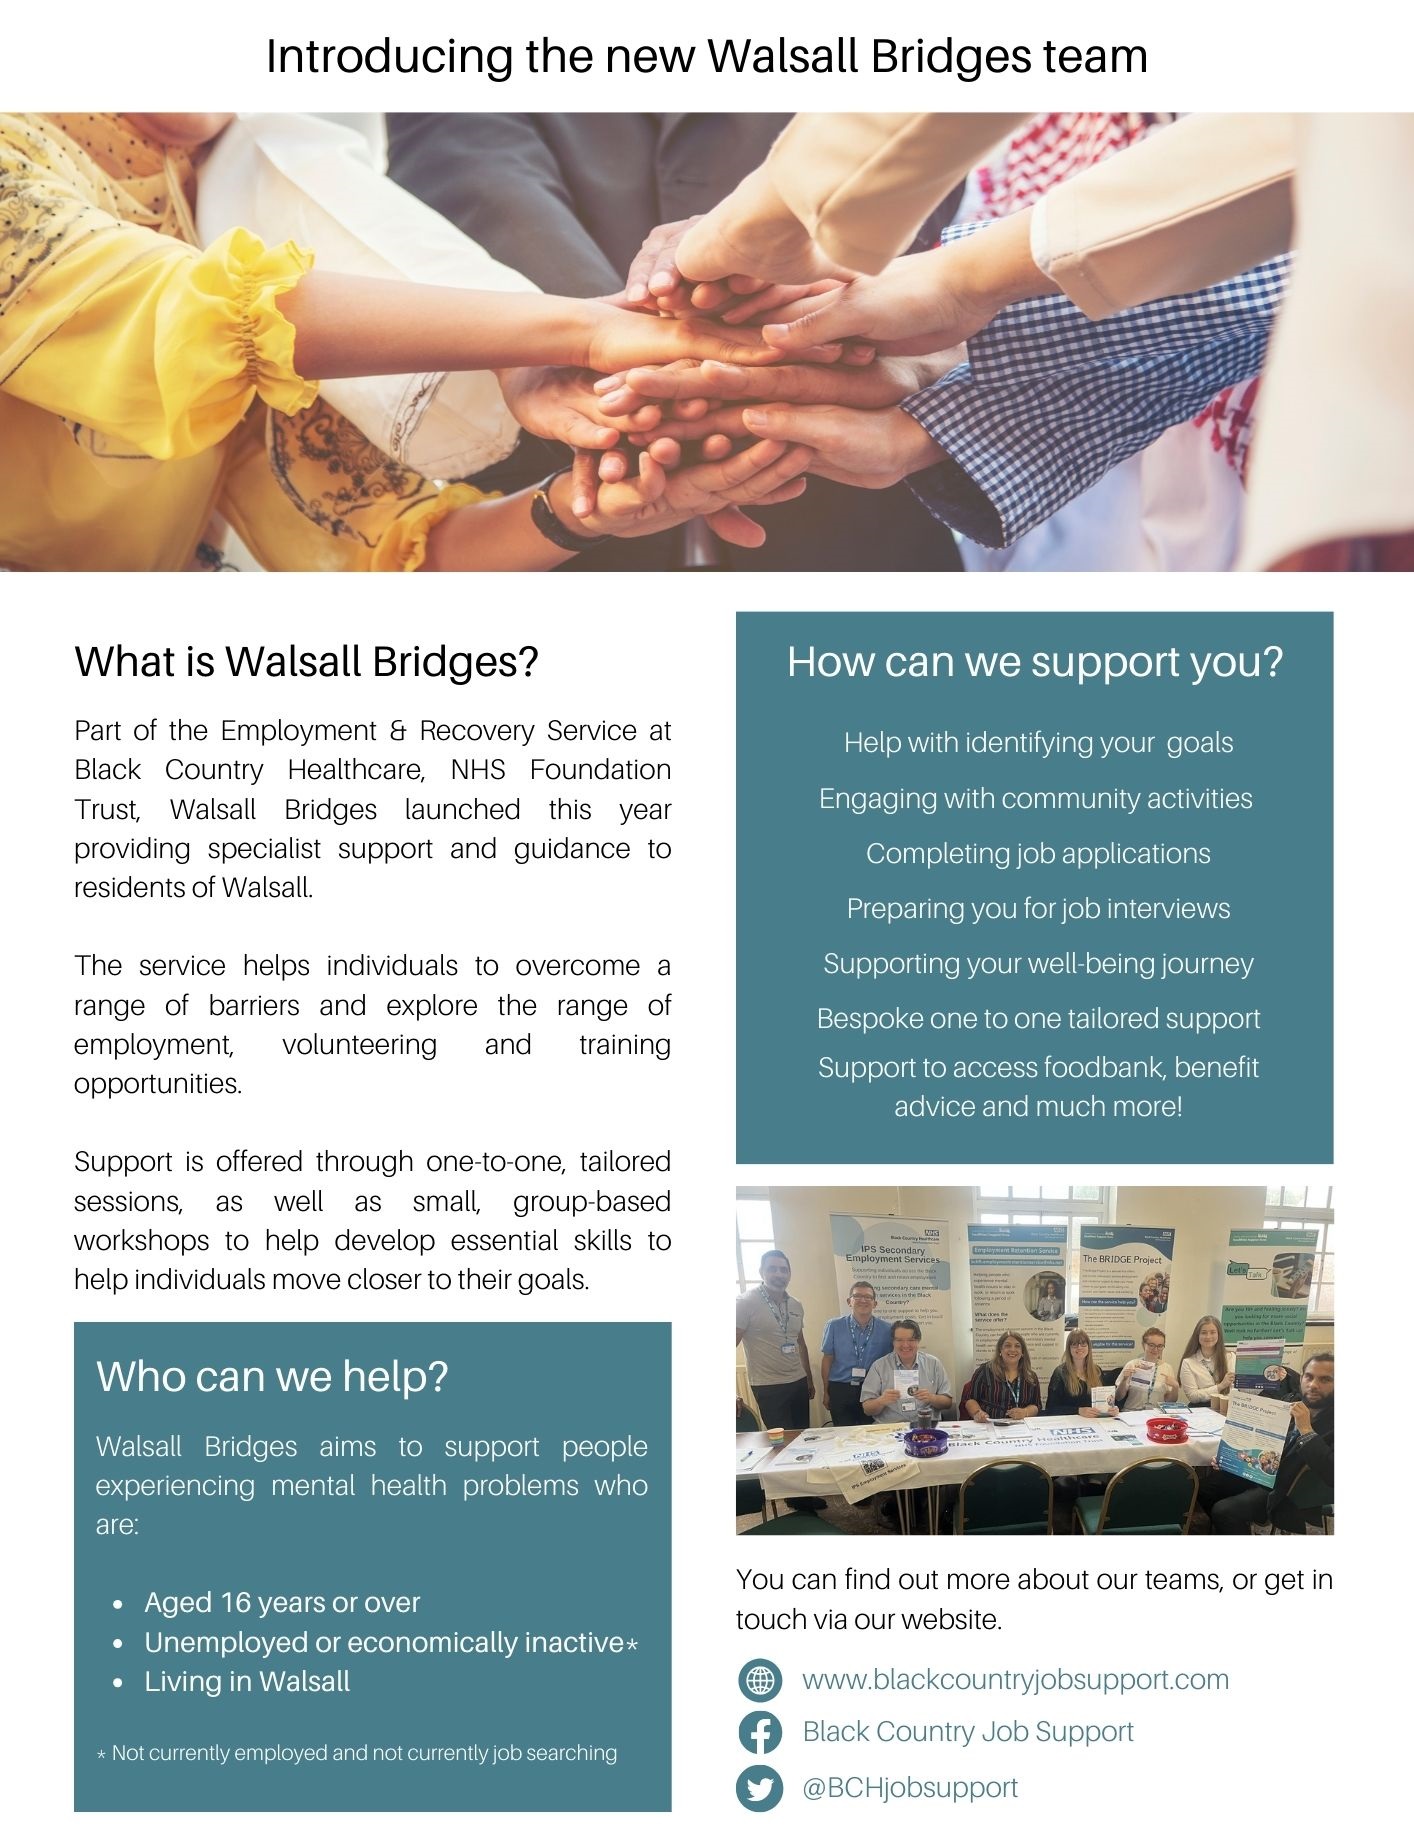 Walsall Bridges Introducing Team 2